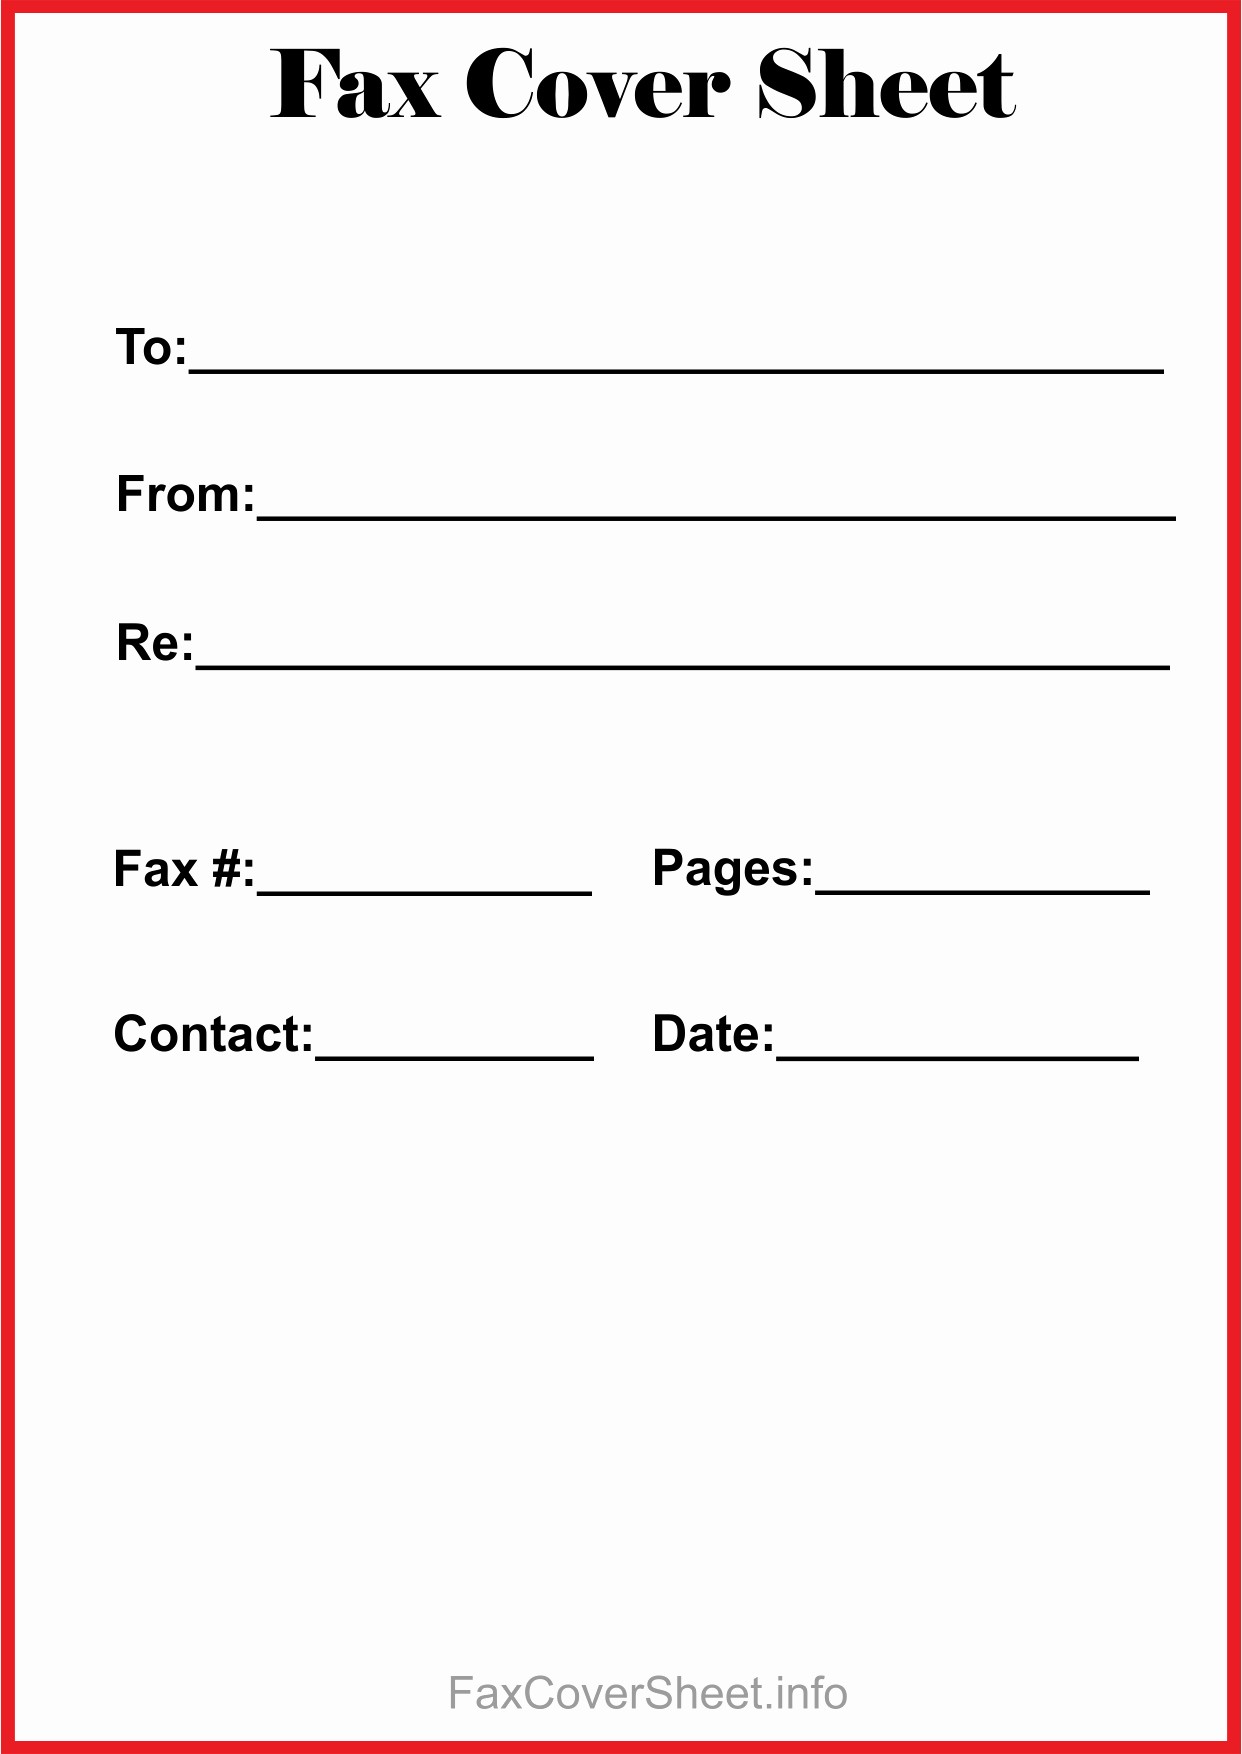 Free Fax Cover Sheet Templates Elegant Free Fax Cover Sheet Template Download